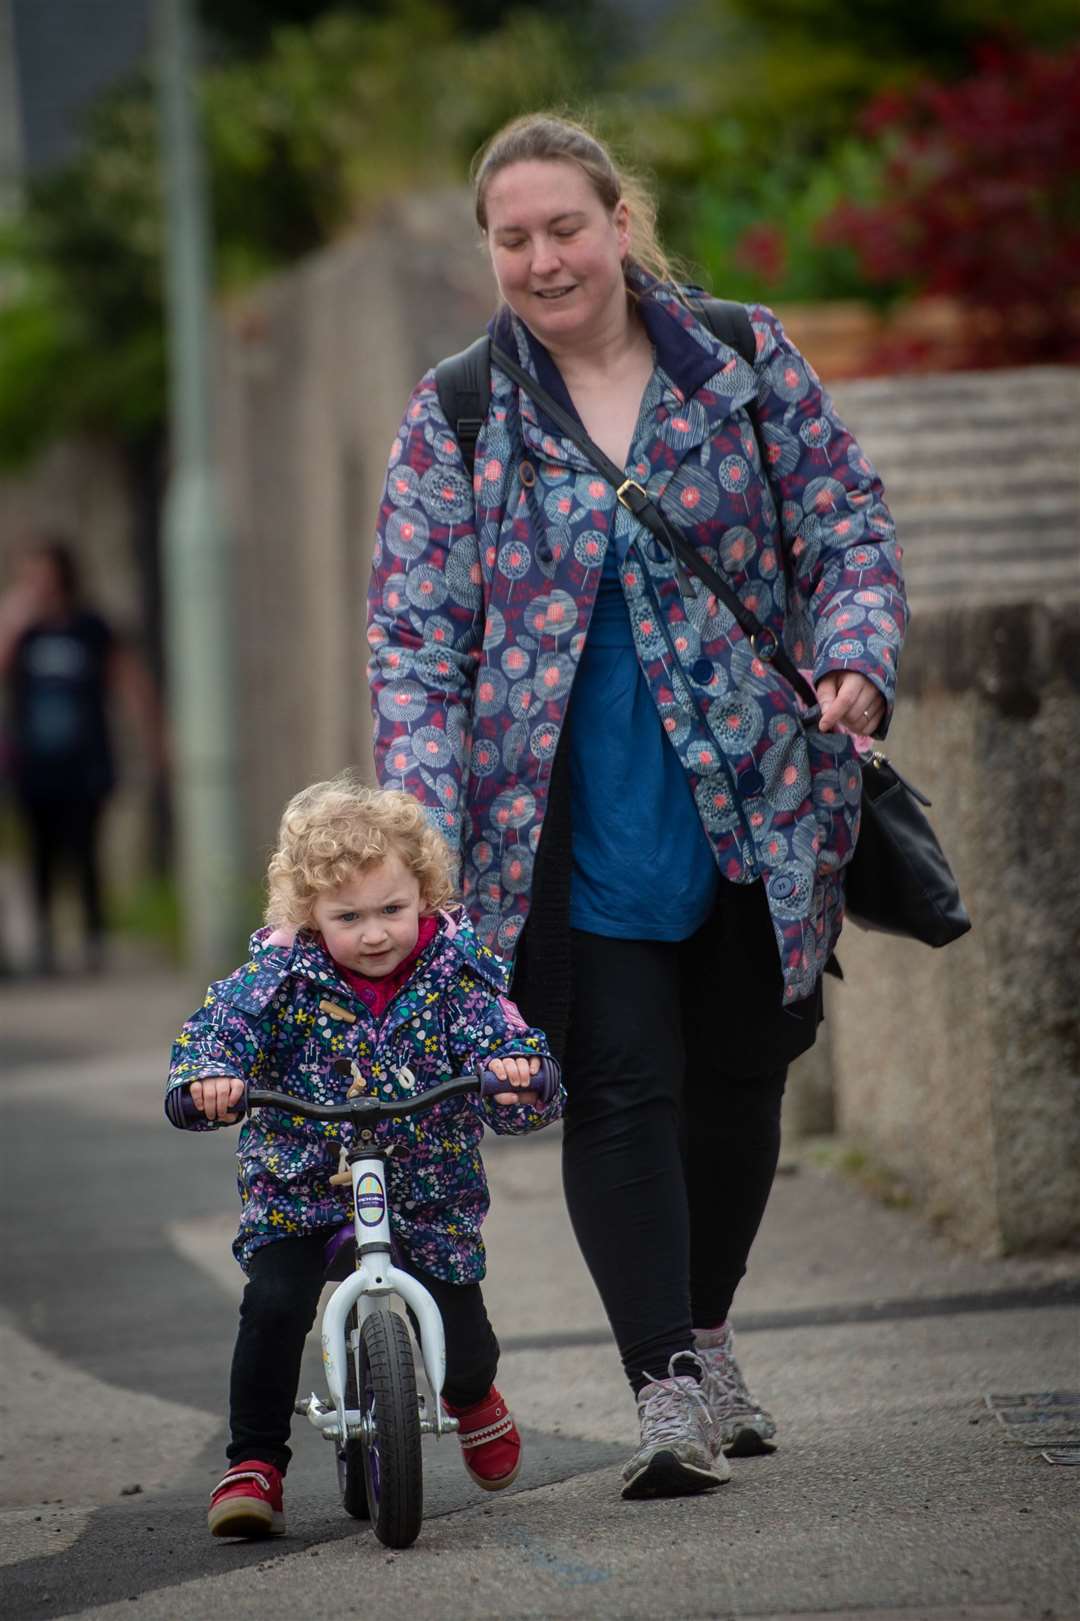 A pedestrian mum and wheeling child in Inverness. Picture: Callum Mackay